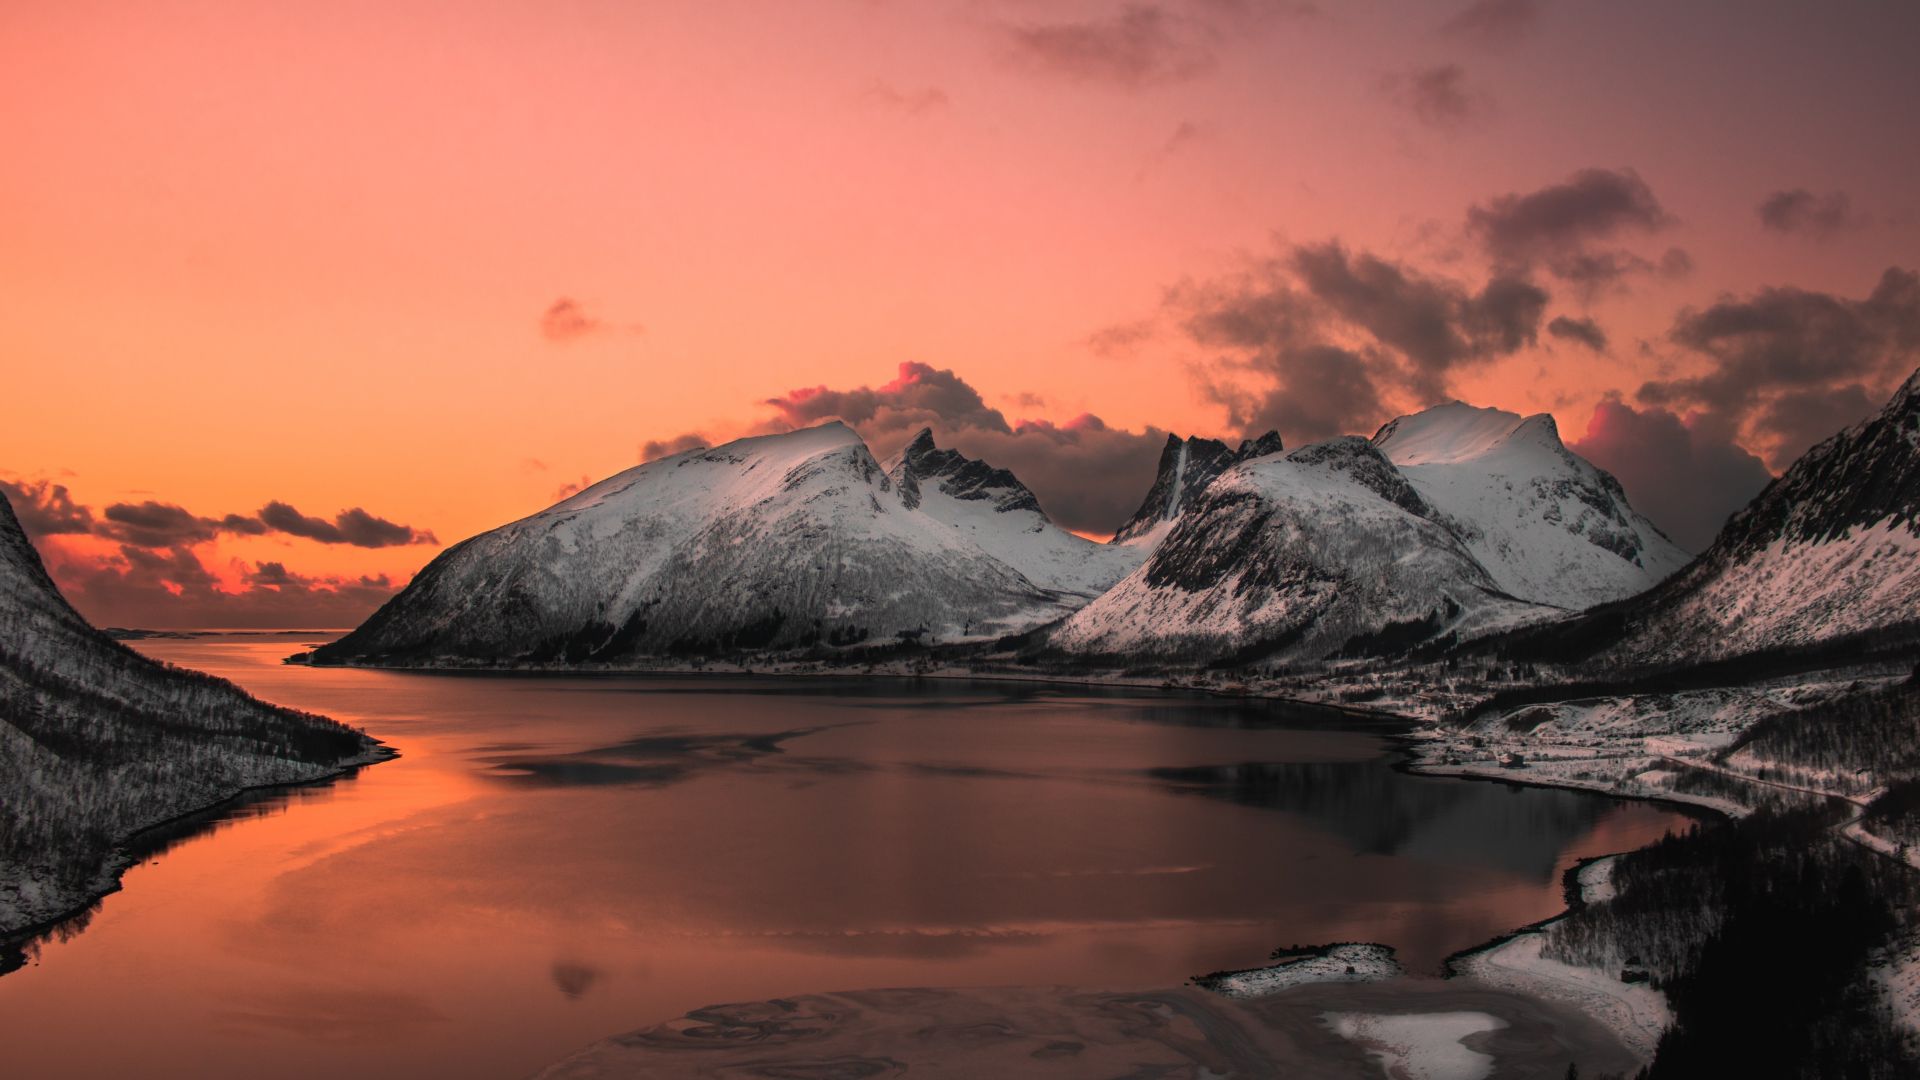 Desktop wallpaper lake, mountains, sunset, nature, HD image, picture, background, daeb70